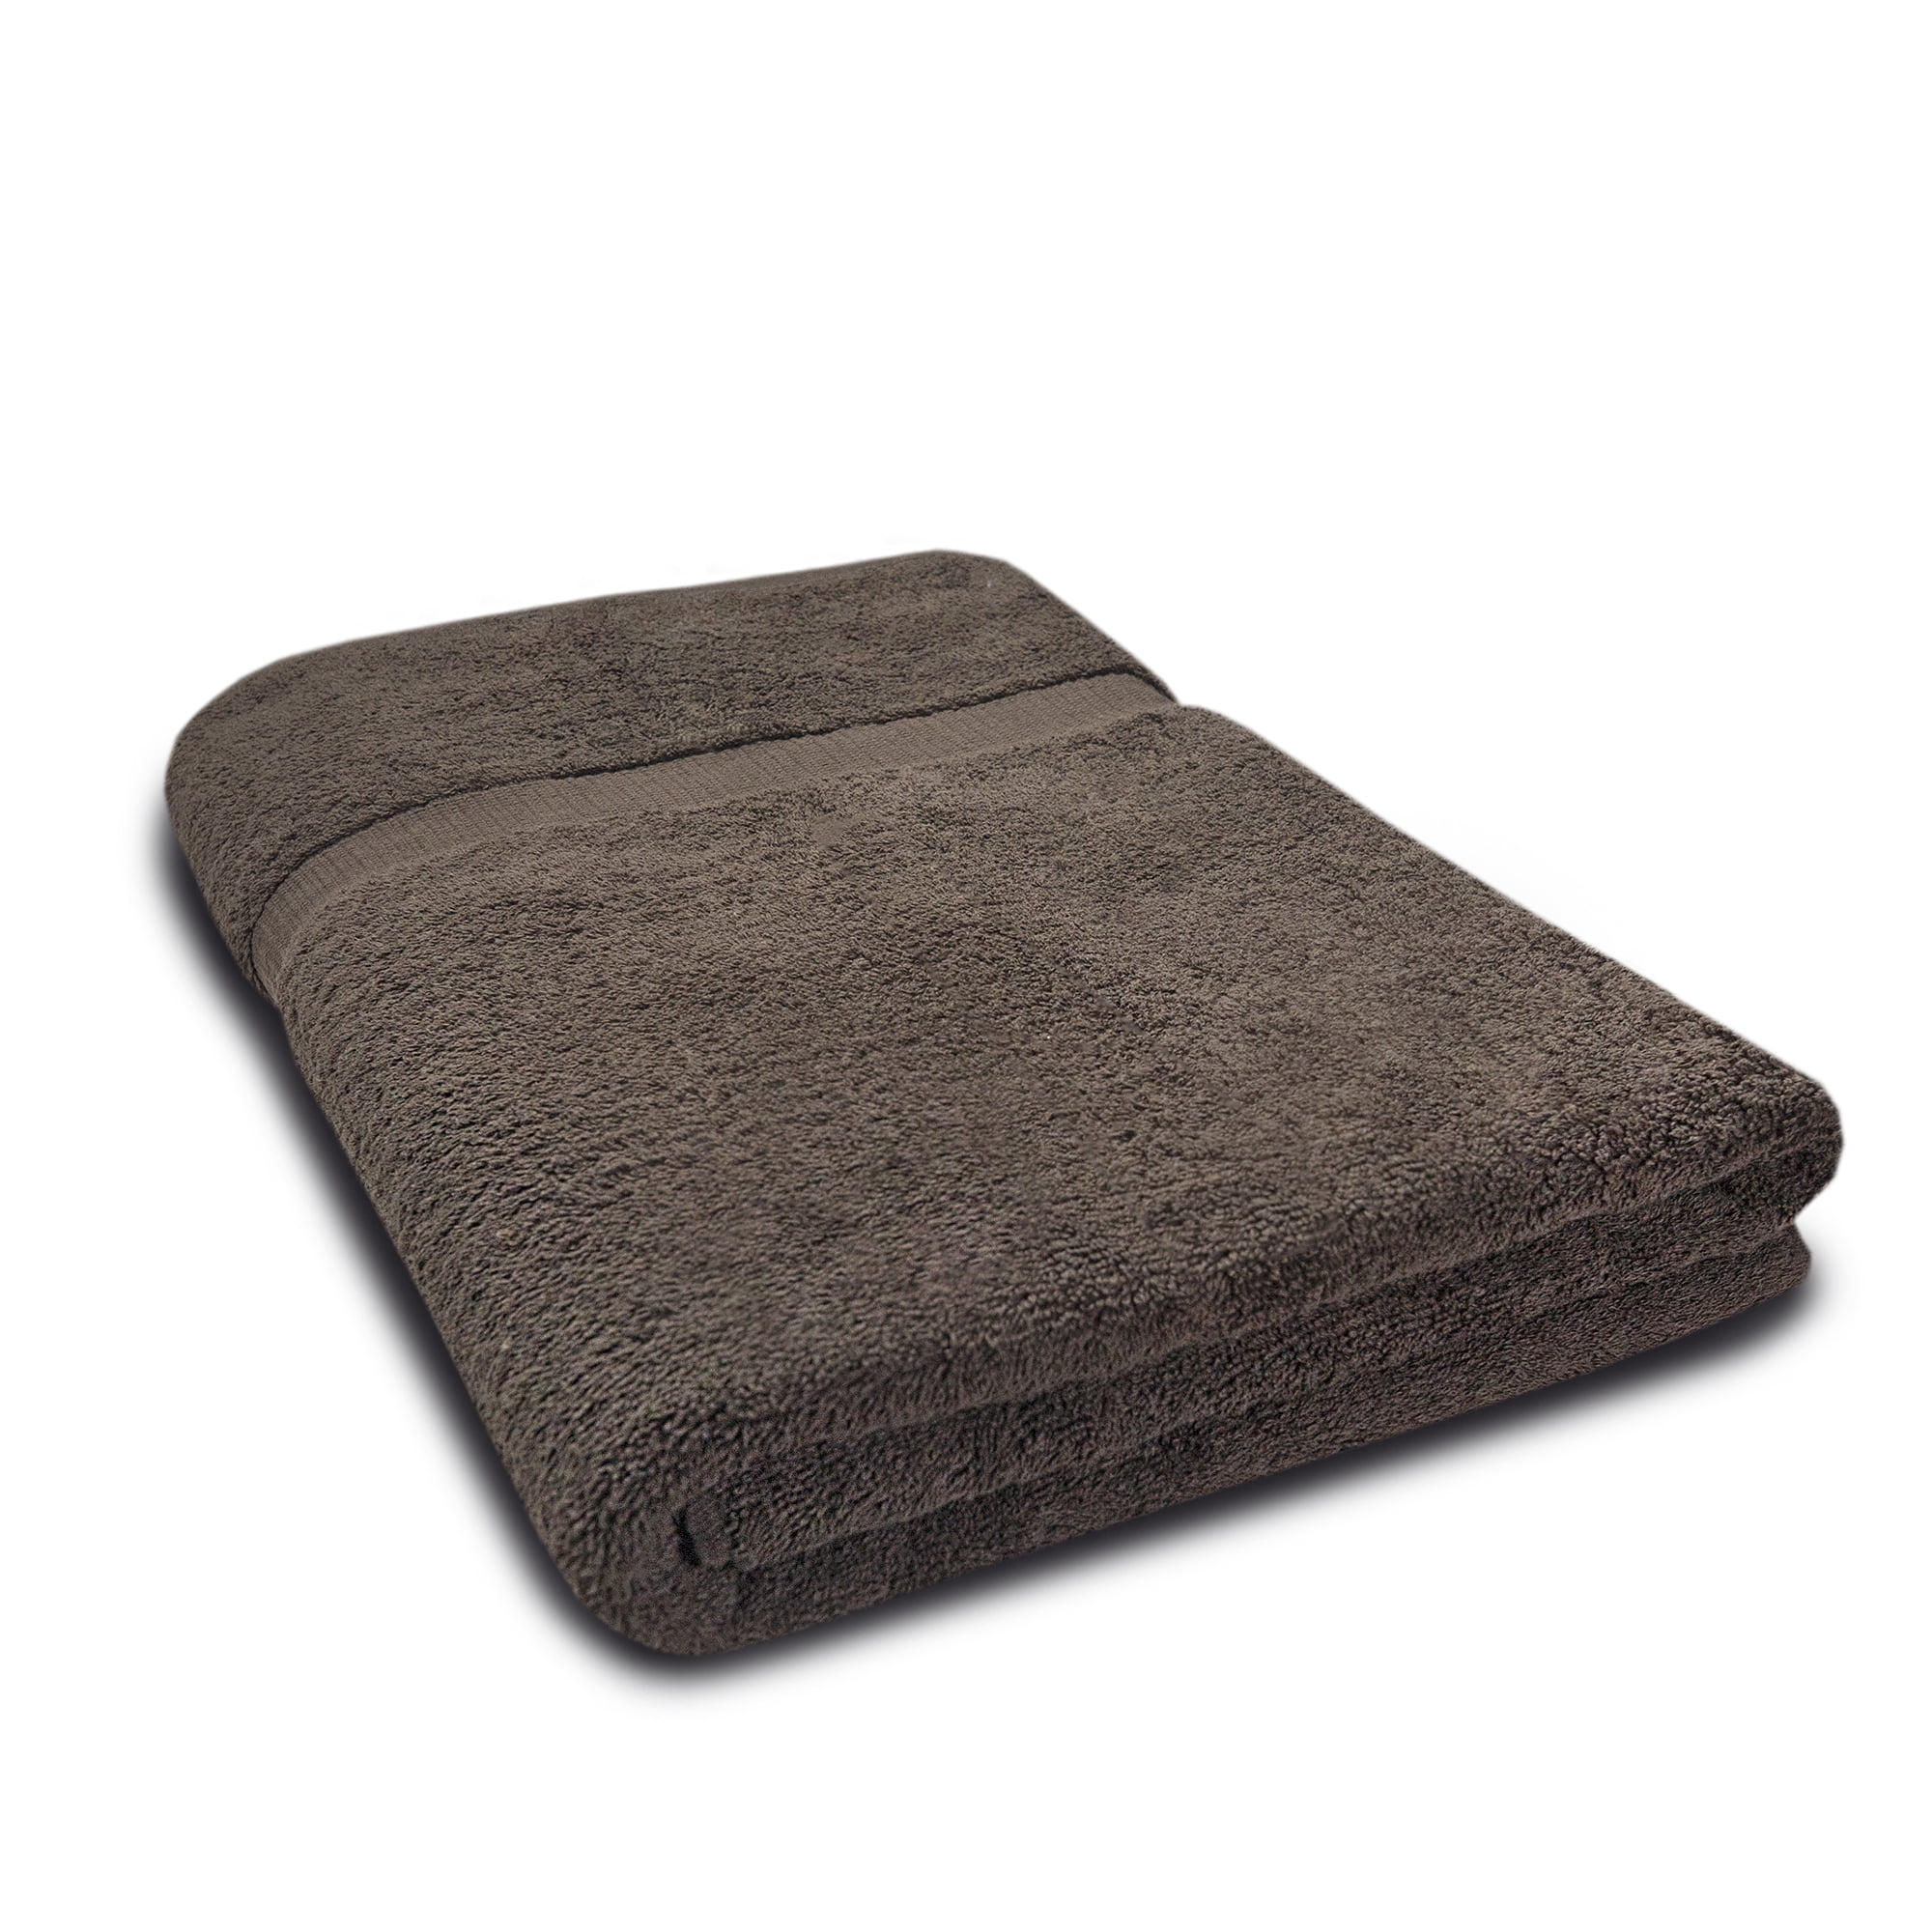 2 X Large Jumbo Bath Sheets 100% Egyptian Combed Cotton Big Towels Mega  Bargain - Towels bay - Medium